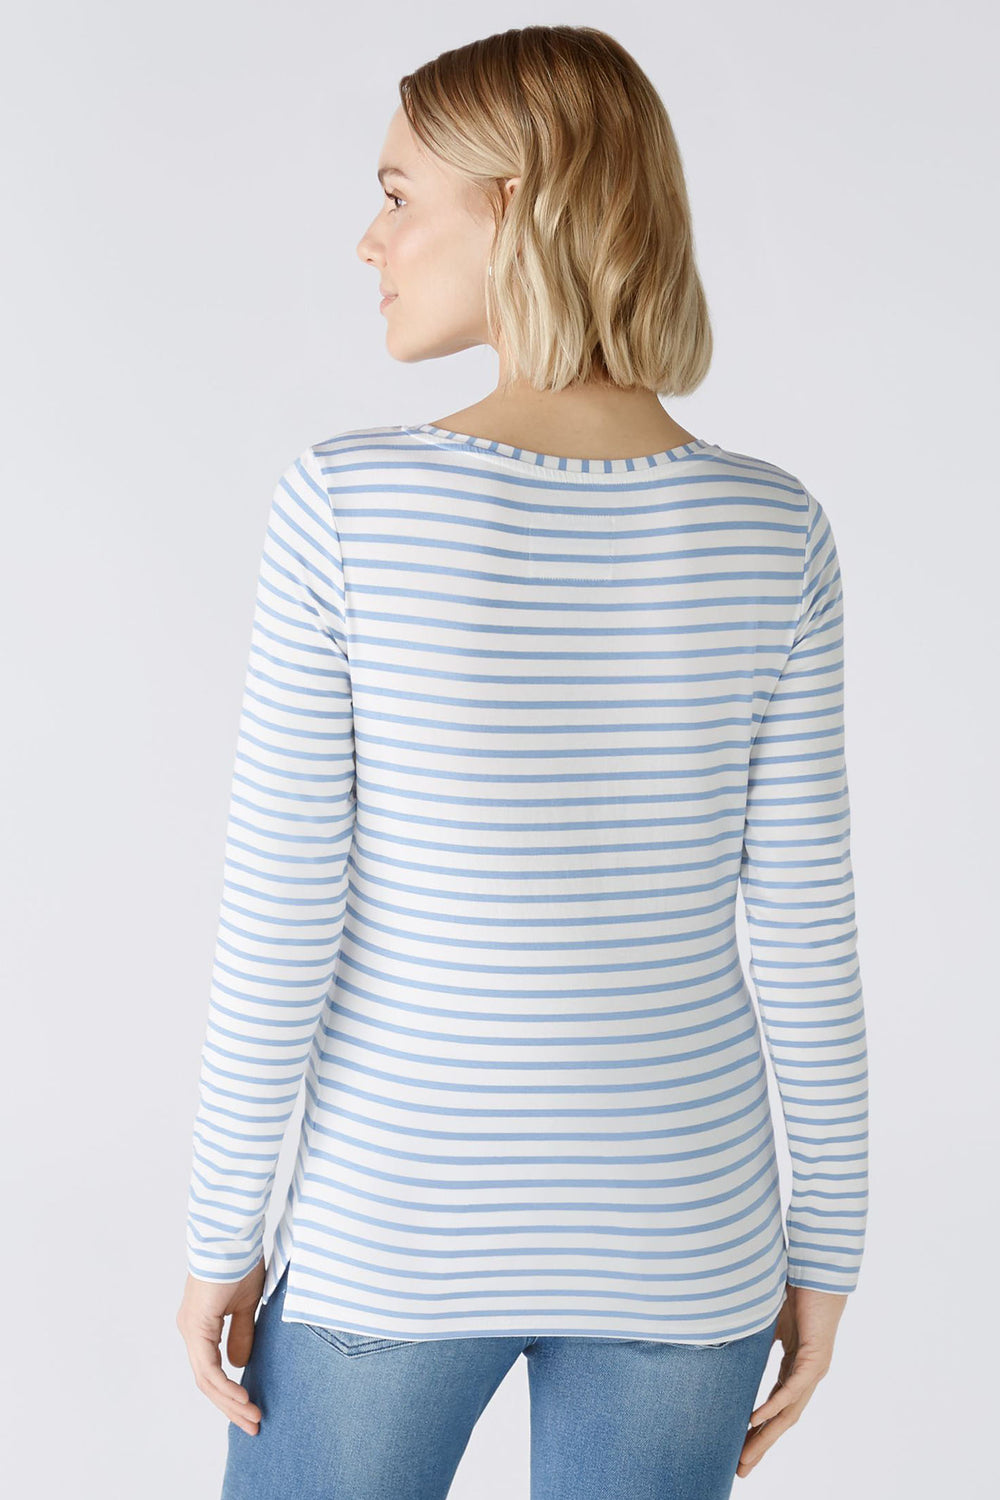 Oui 88220 White & Blue Striped Round Neck Long Sleeve Top - Olivia Grace Fashion